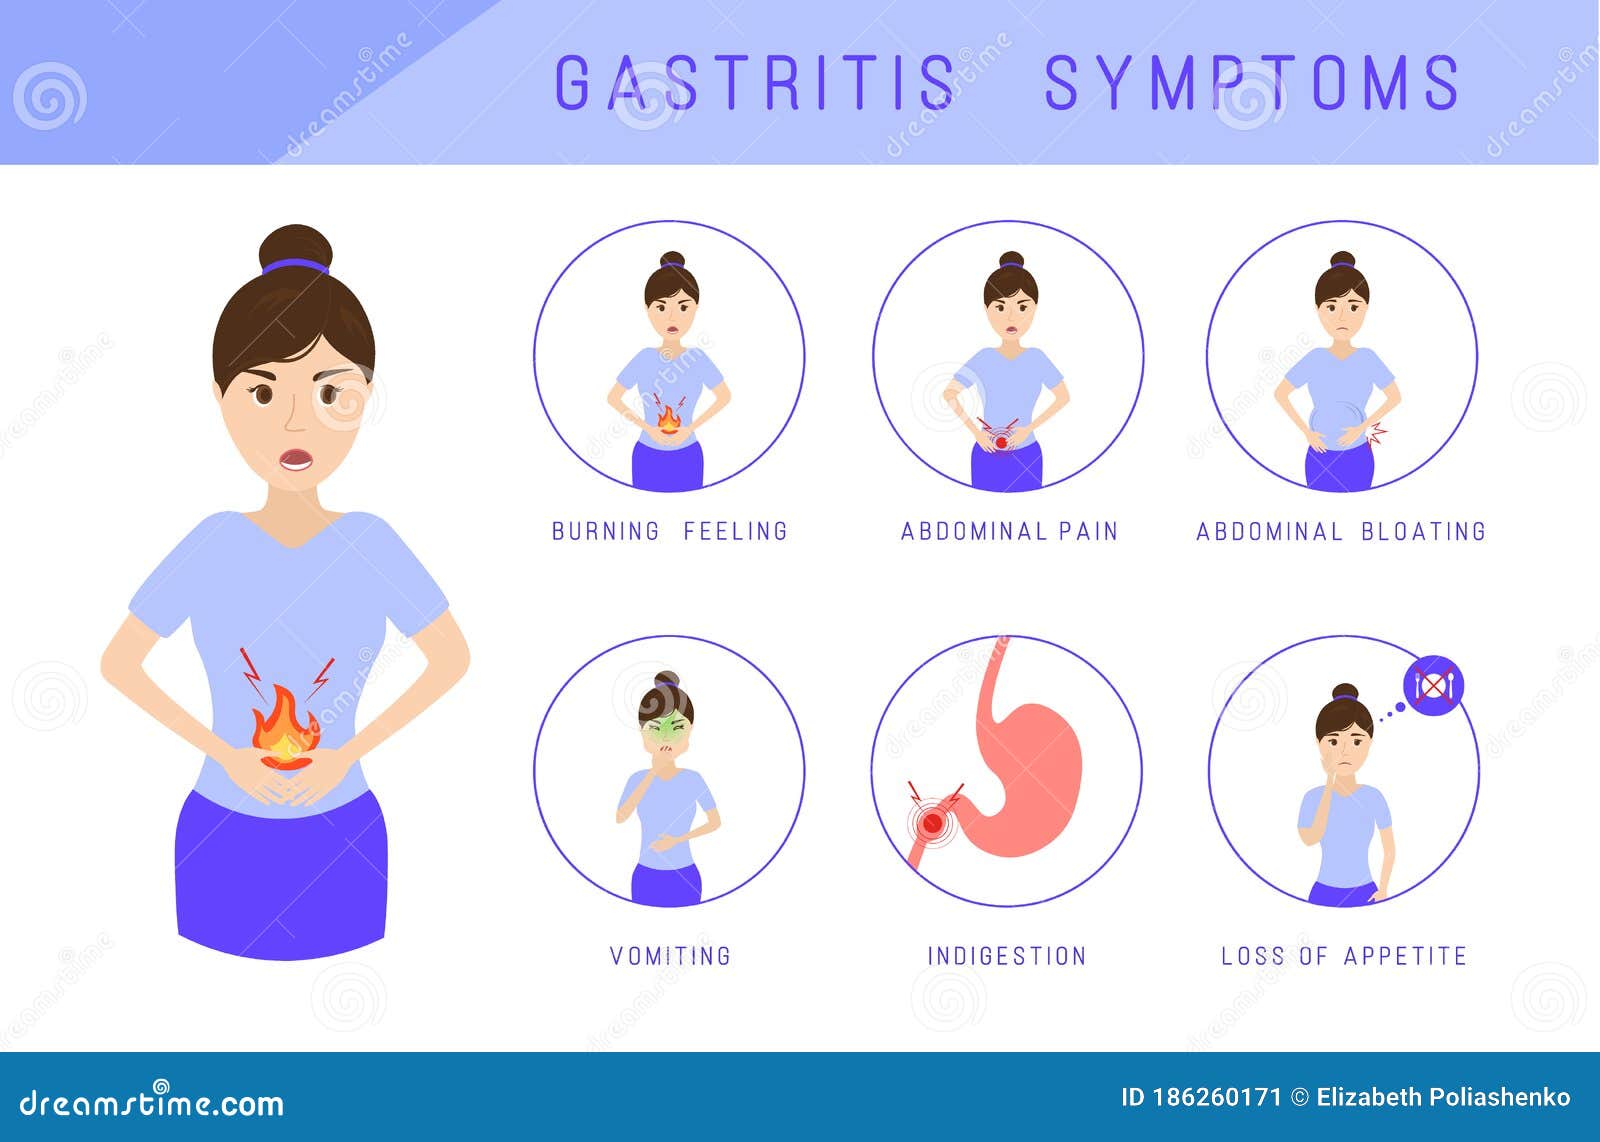 Gastritis gases